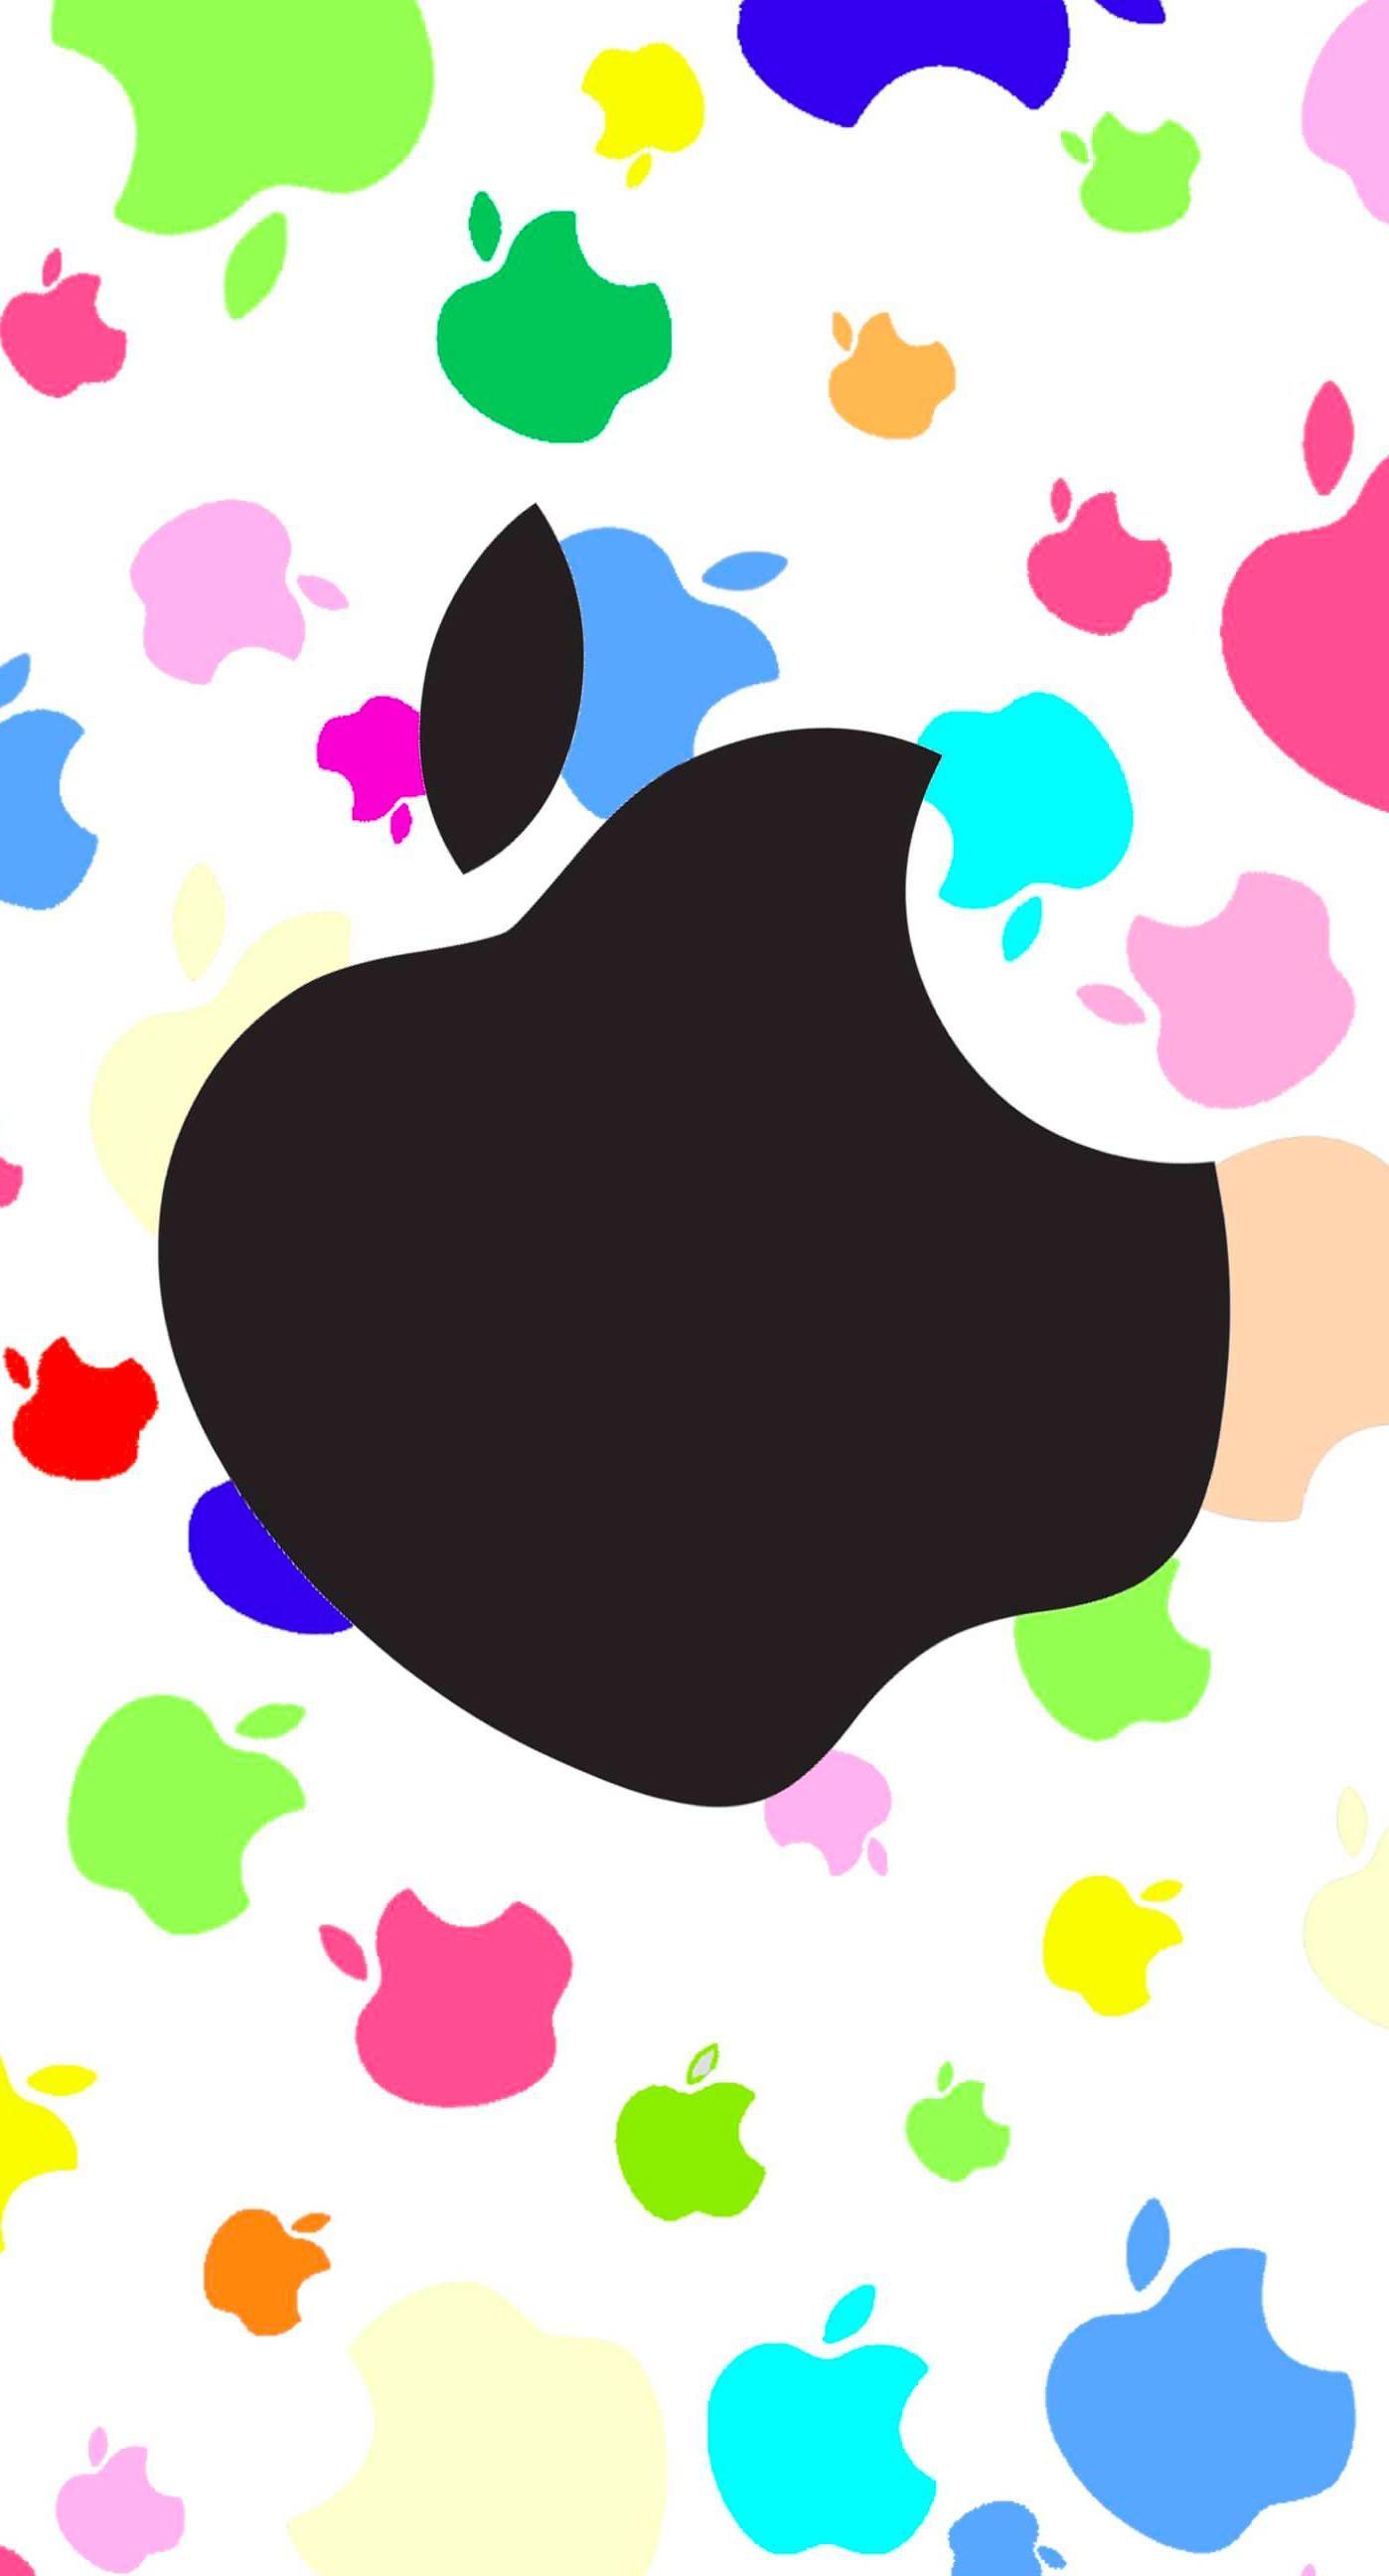 Colorful Apple Logo - Colorful Apple Logo Wallpaper image. Apple Love!. Apple